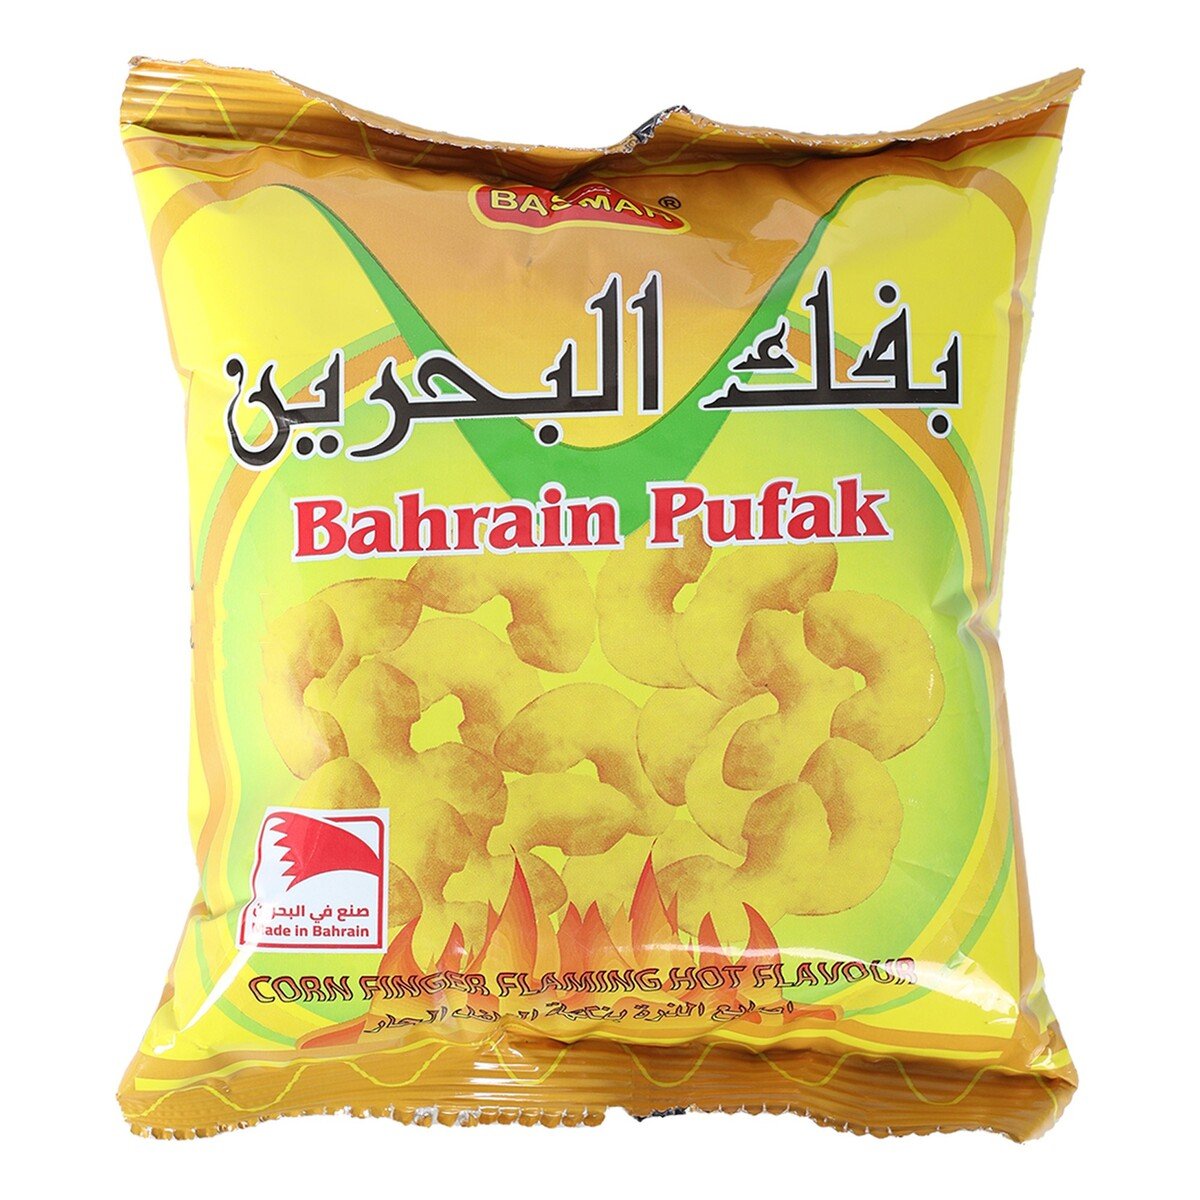 Basmah Bahrain Pufak Flamin Hot Flavour 24 x 14g